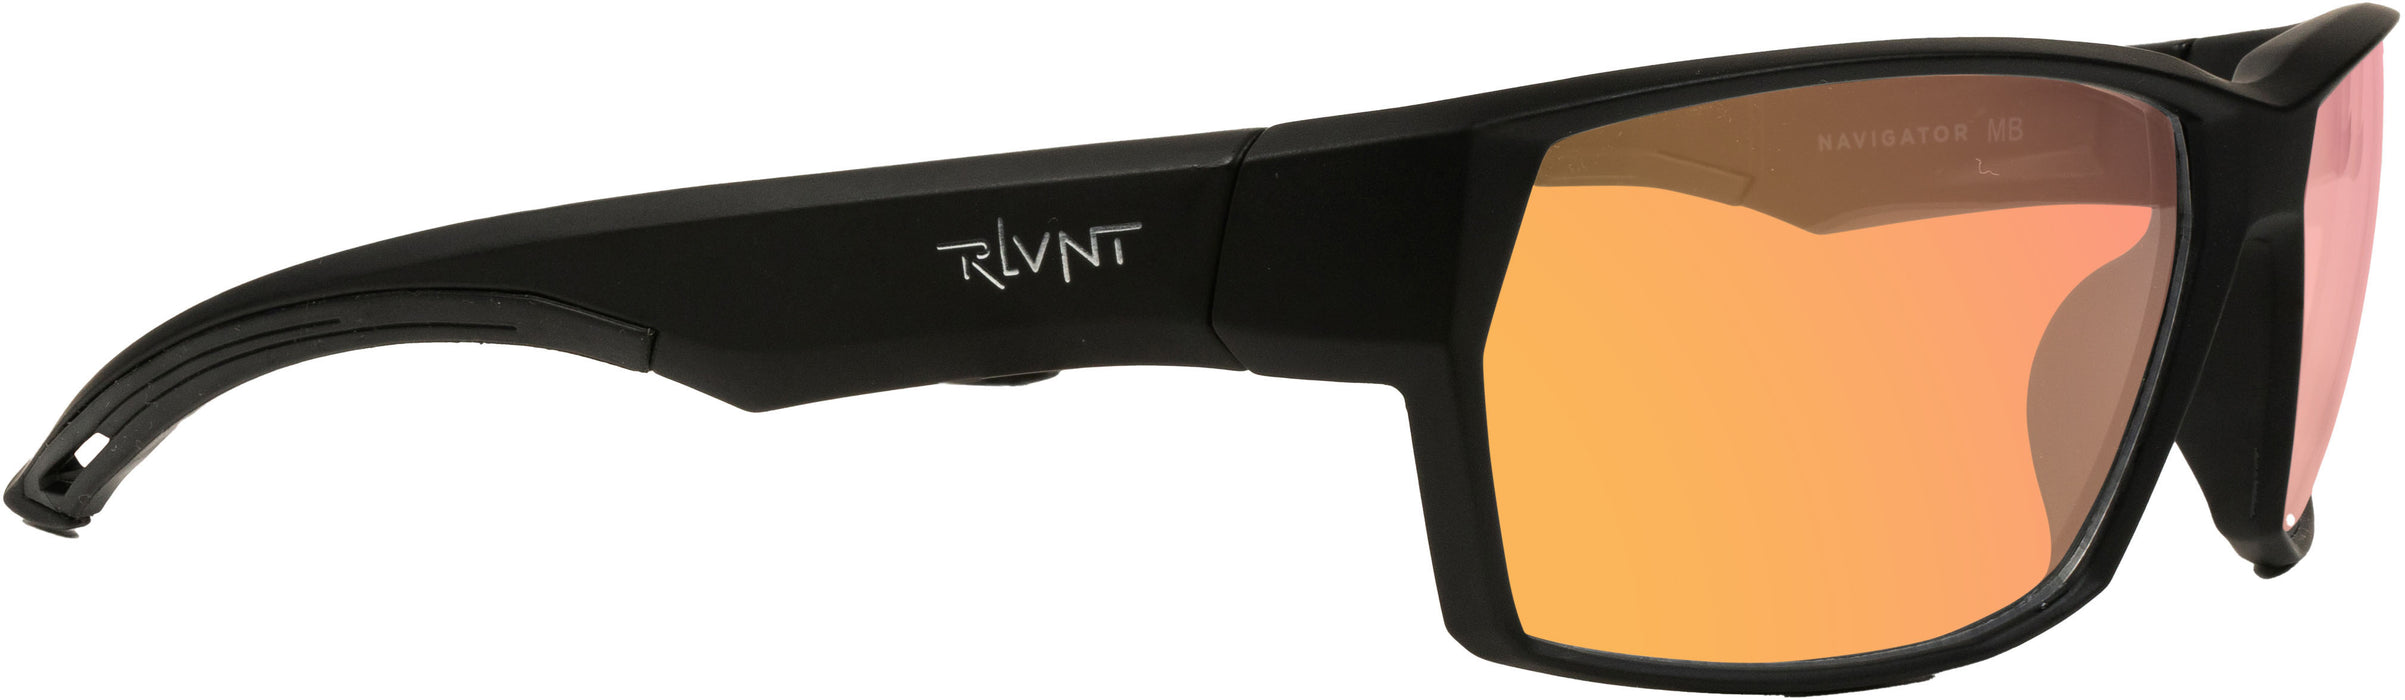 RLVNT Navigator Series Sunglasses